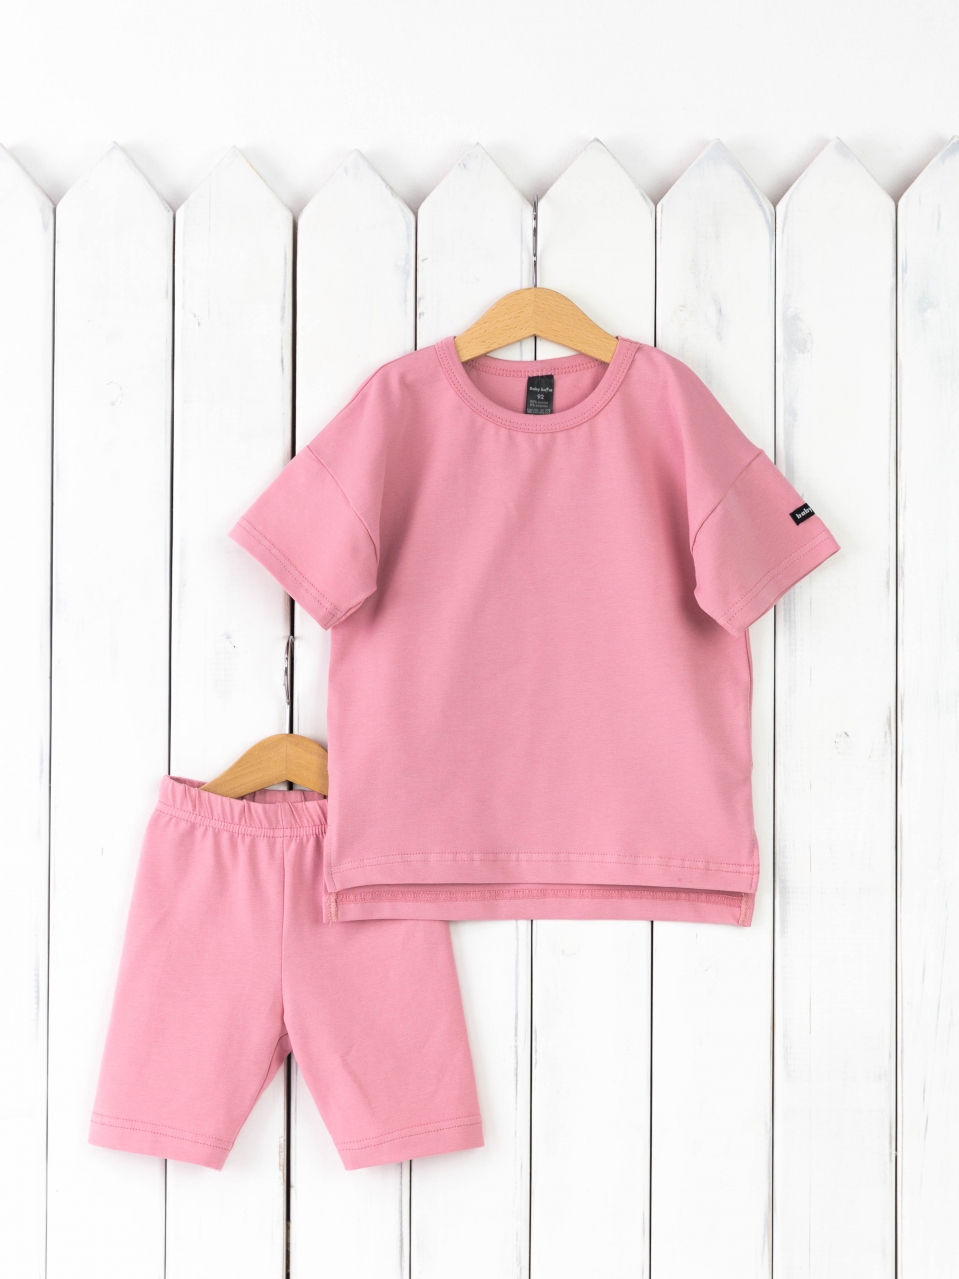 КД416/9-К Комплект детский р.122 футболка+легинсы/розовый зефир Бэби Бум - Самара 